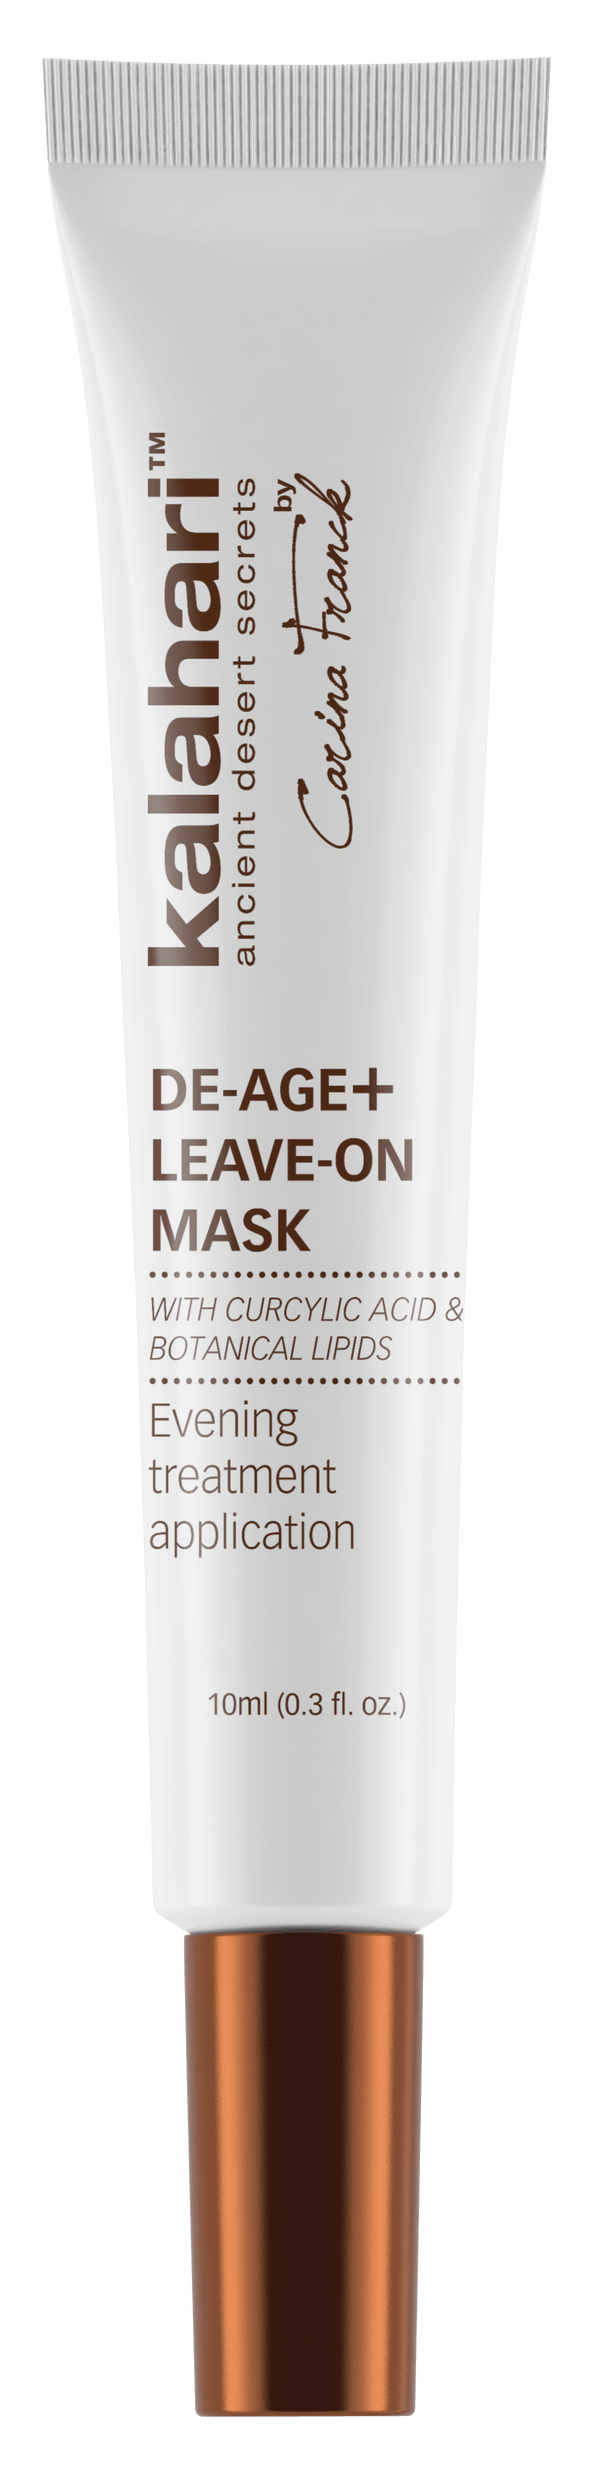 De age leave on mask